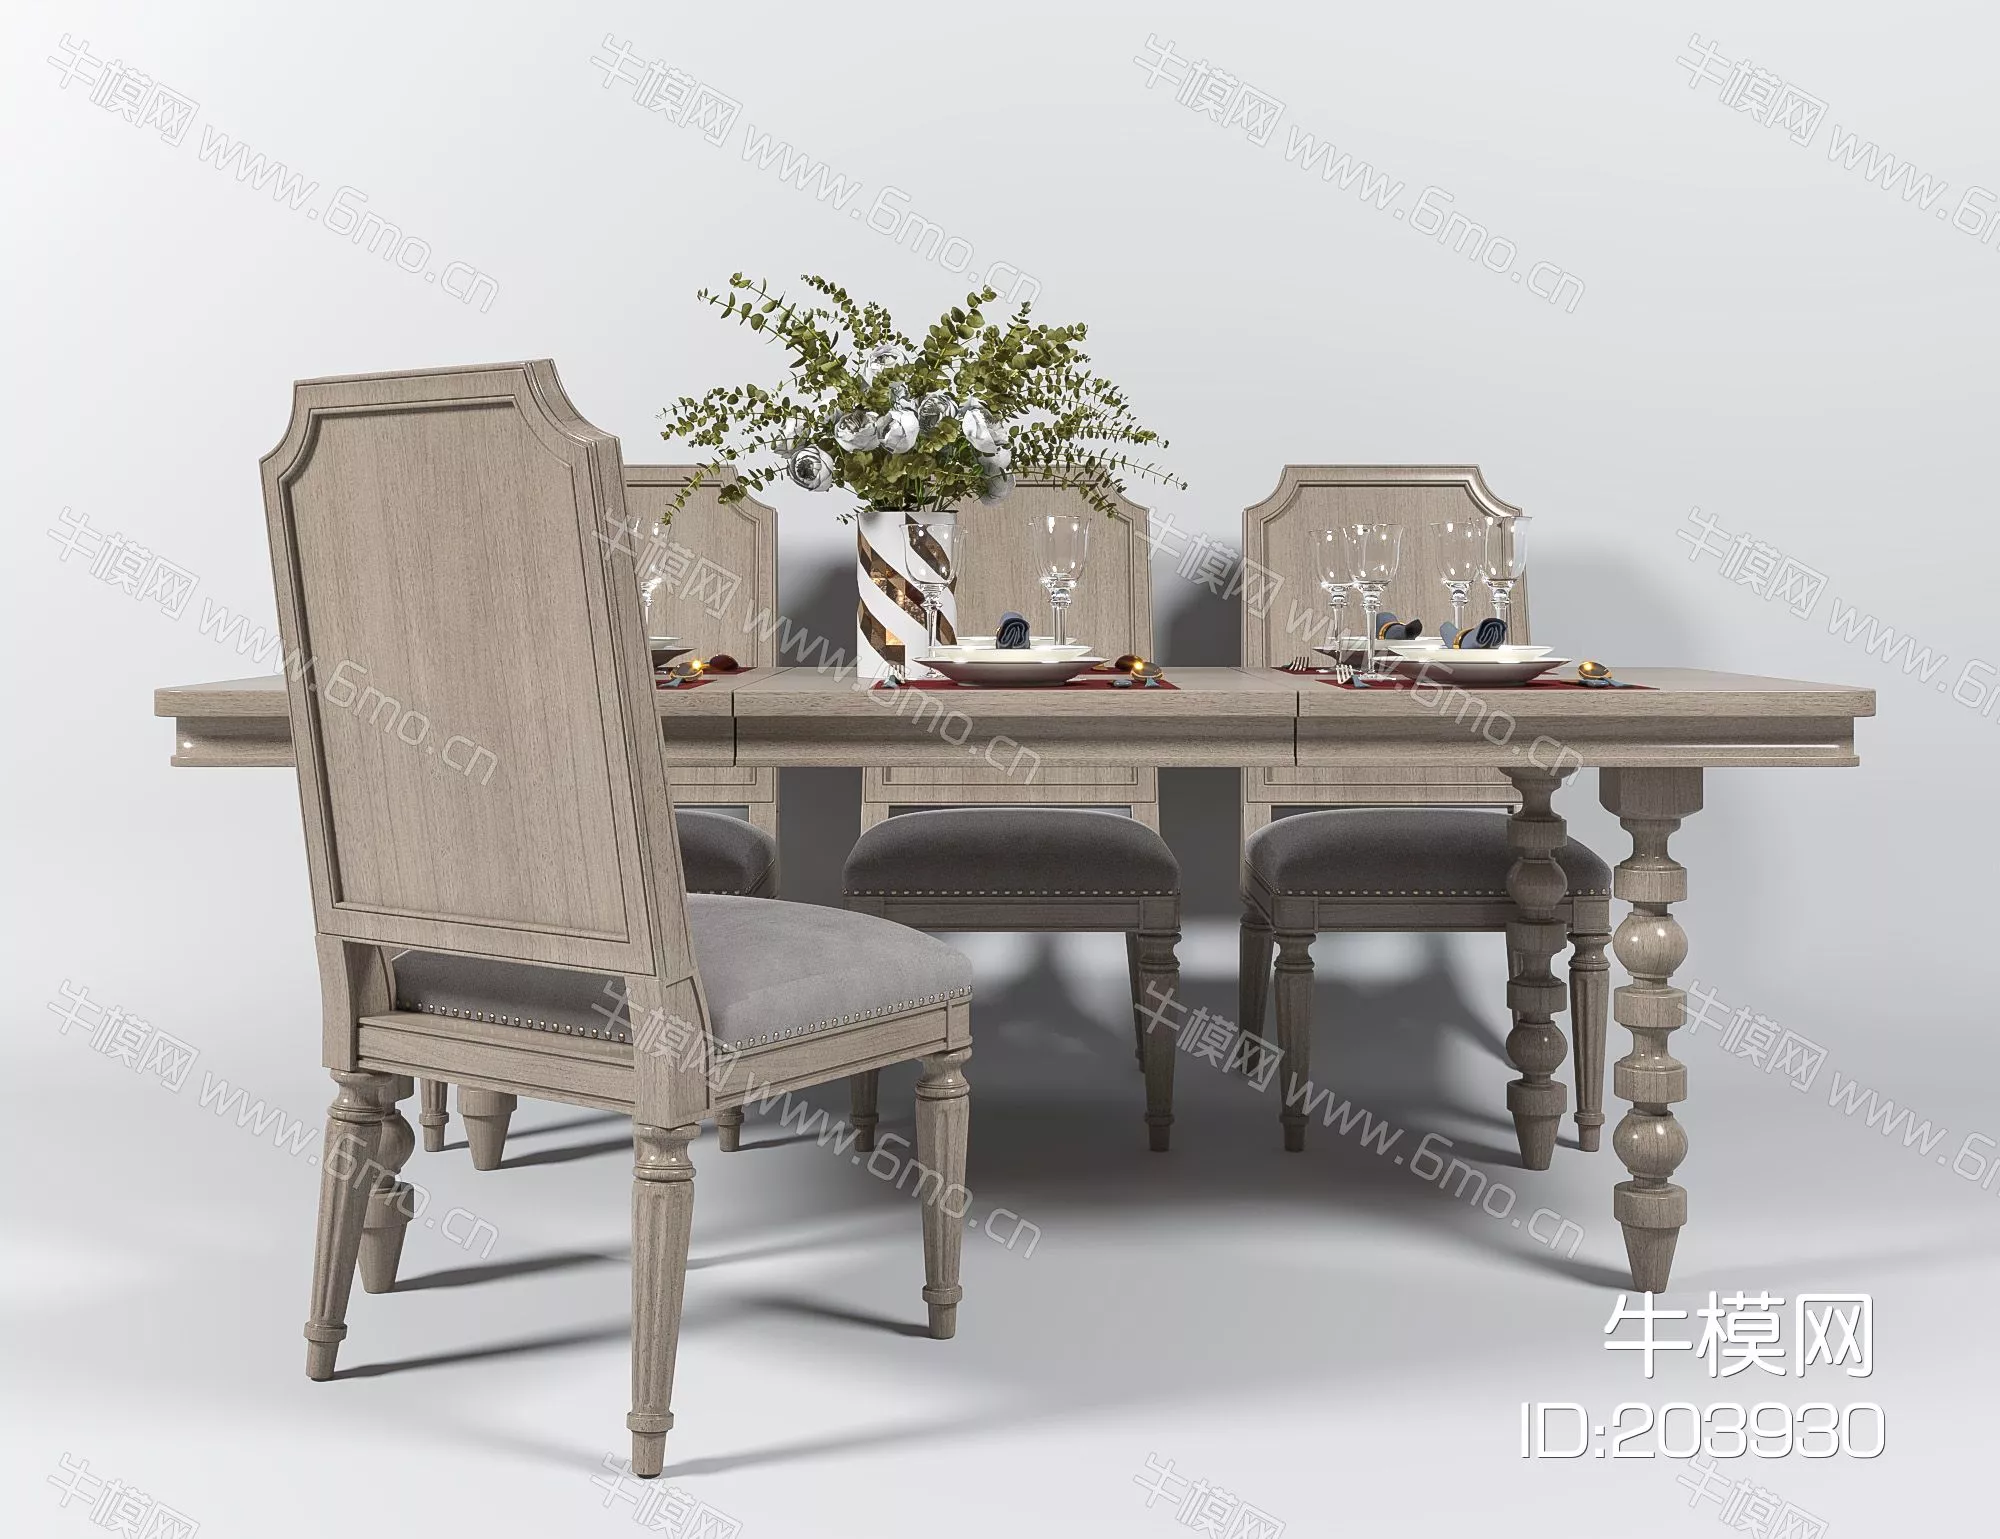 AMERICAN DINING TABLE SET - SKETCHUP 3D MODEL - ENSCAPE - 203930